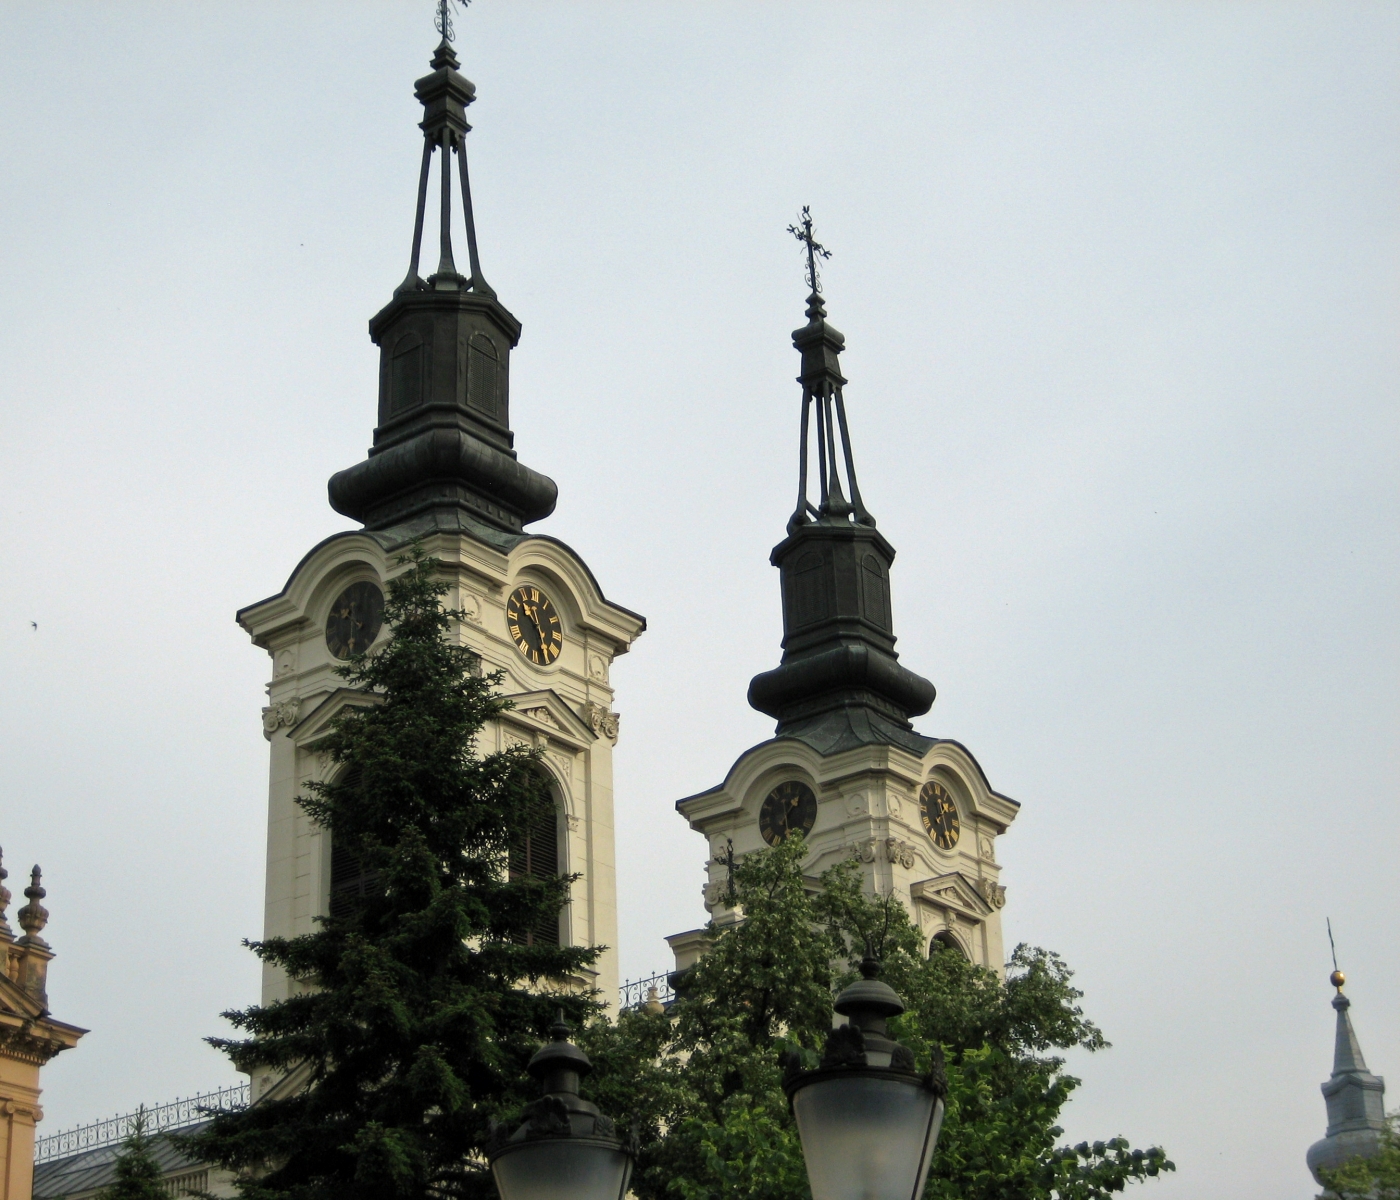 St. Nicholas Orthodox,steeples, Sremski Karlovci, Serbia